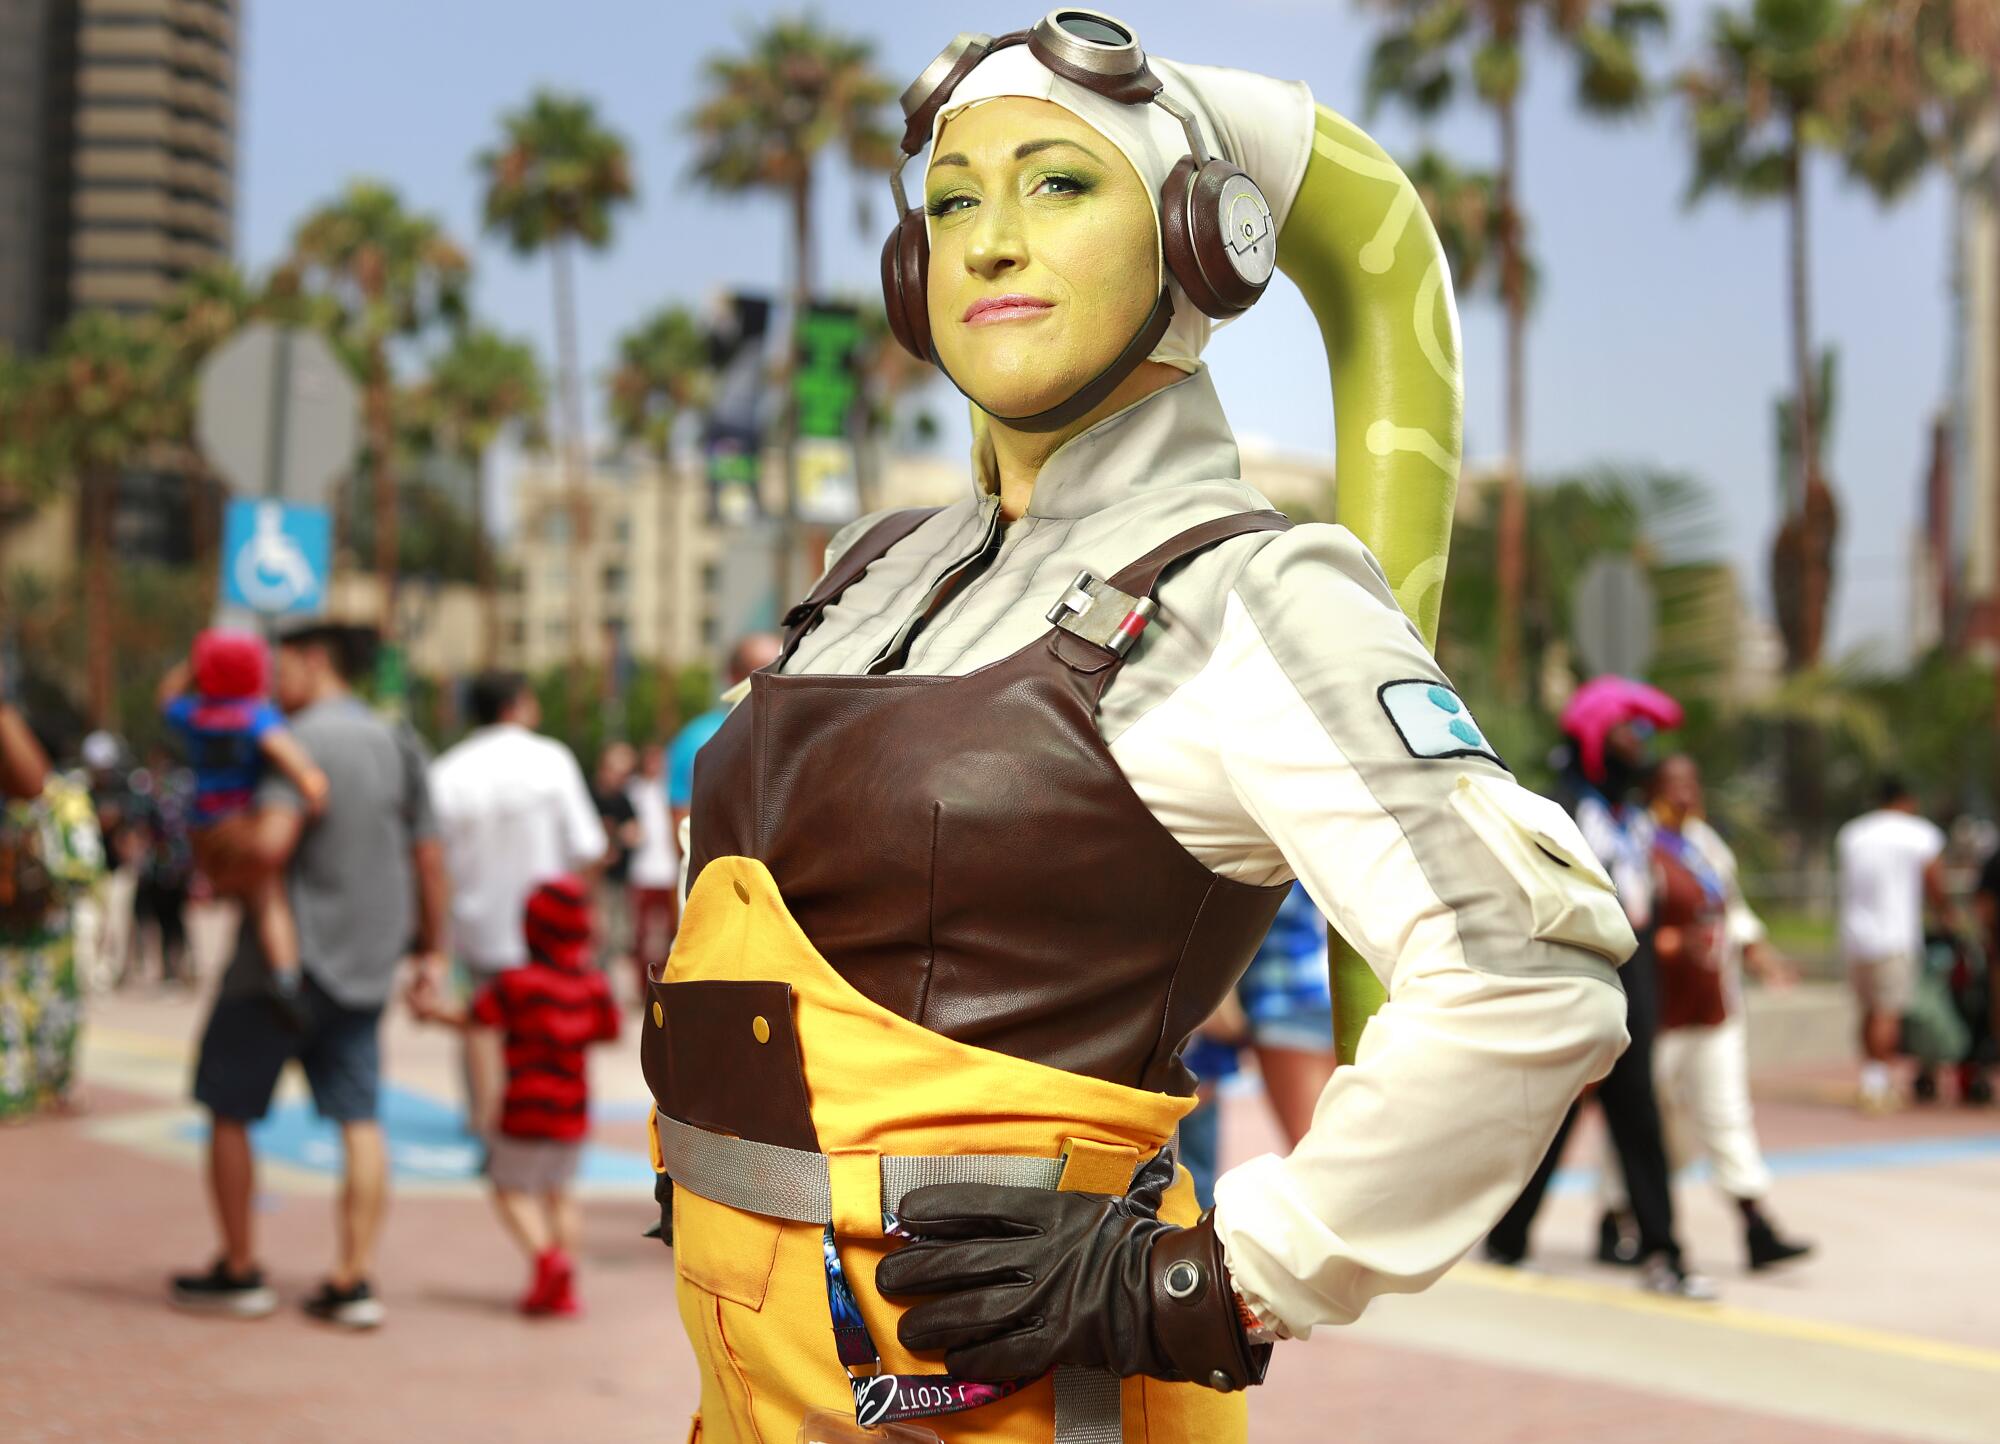 Berg Raebel of Milwaukee dressed as Hera Syndulla from the animated series Star Wars Rebel.